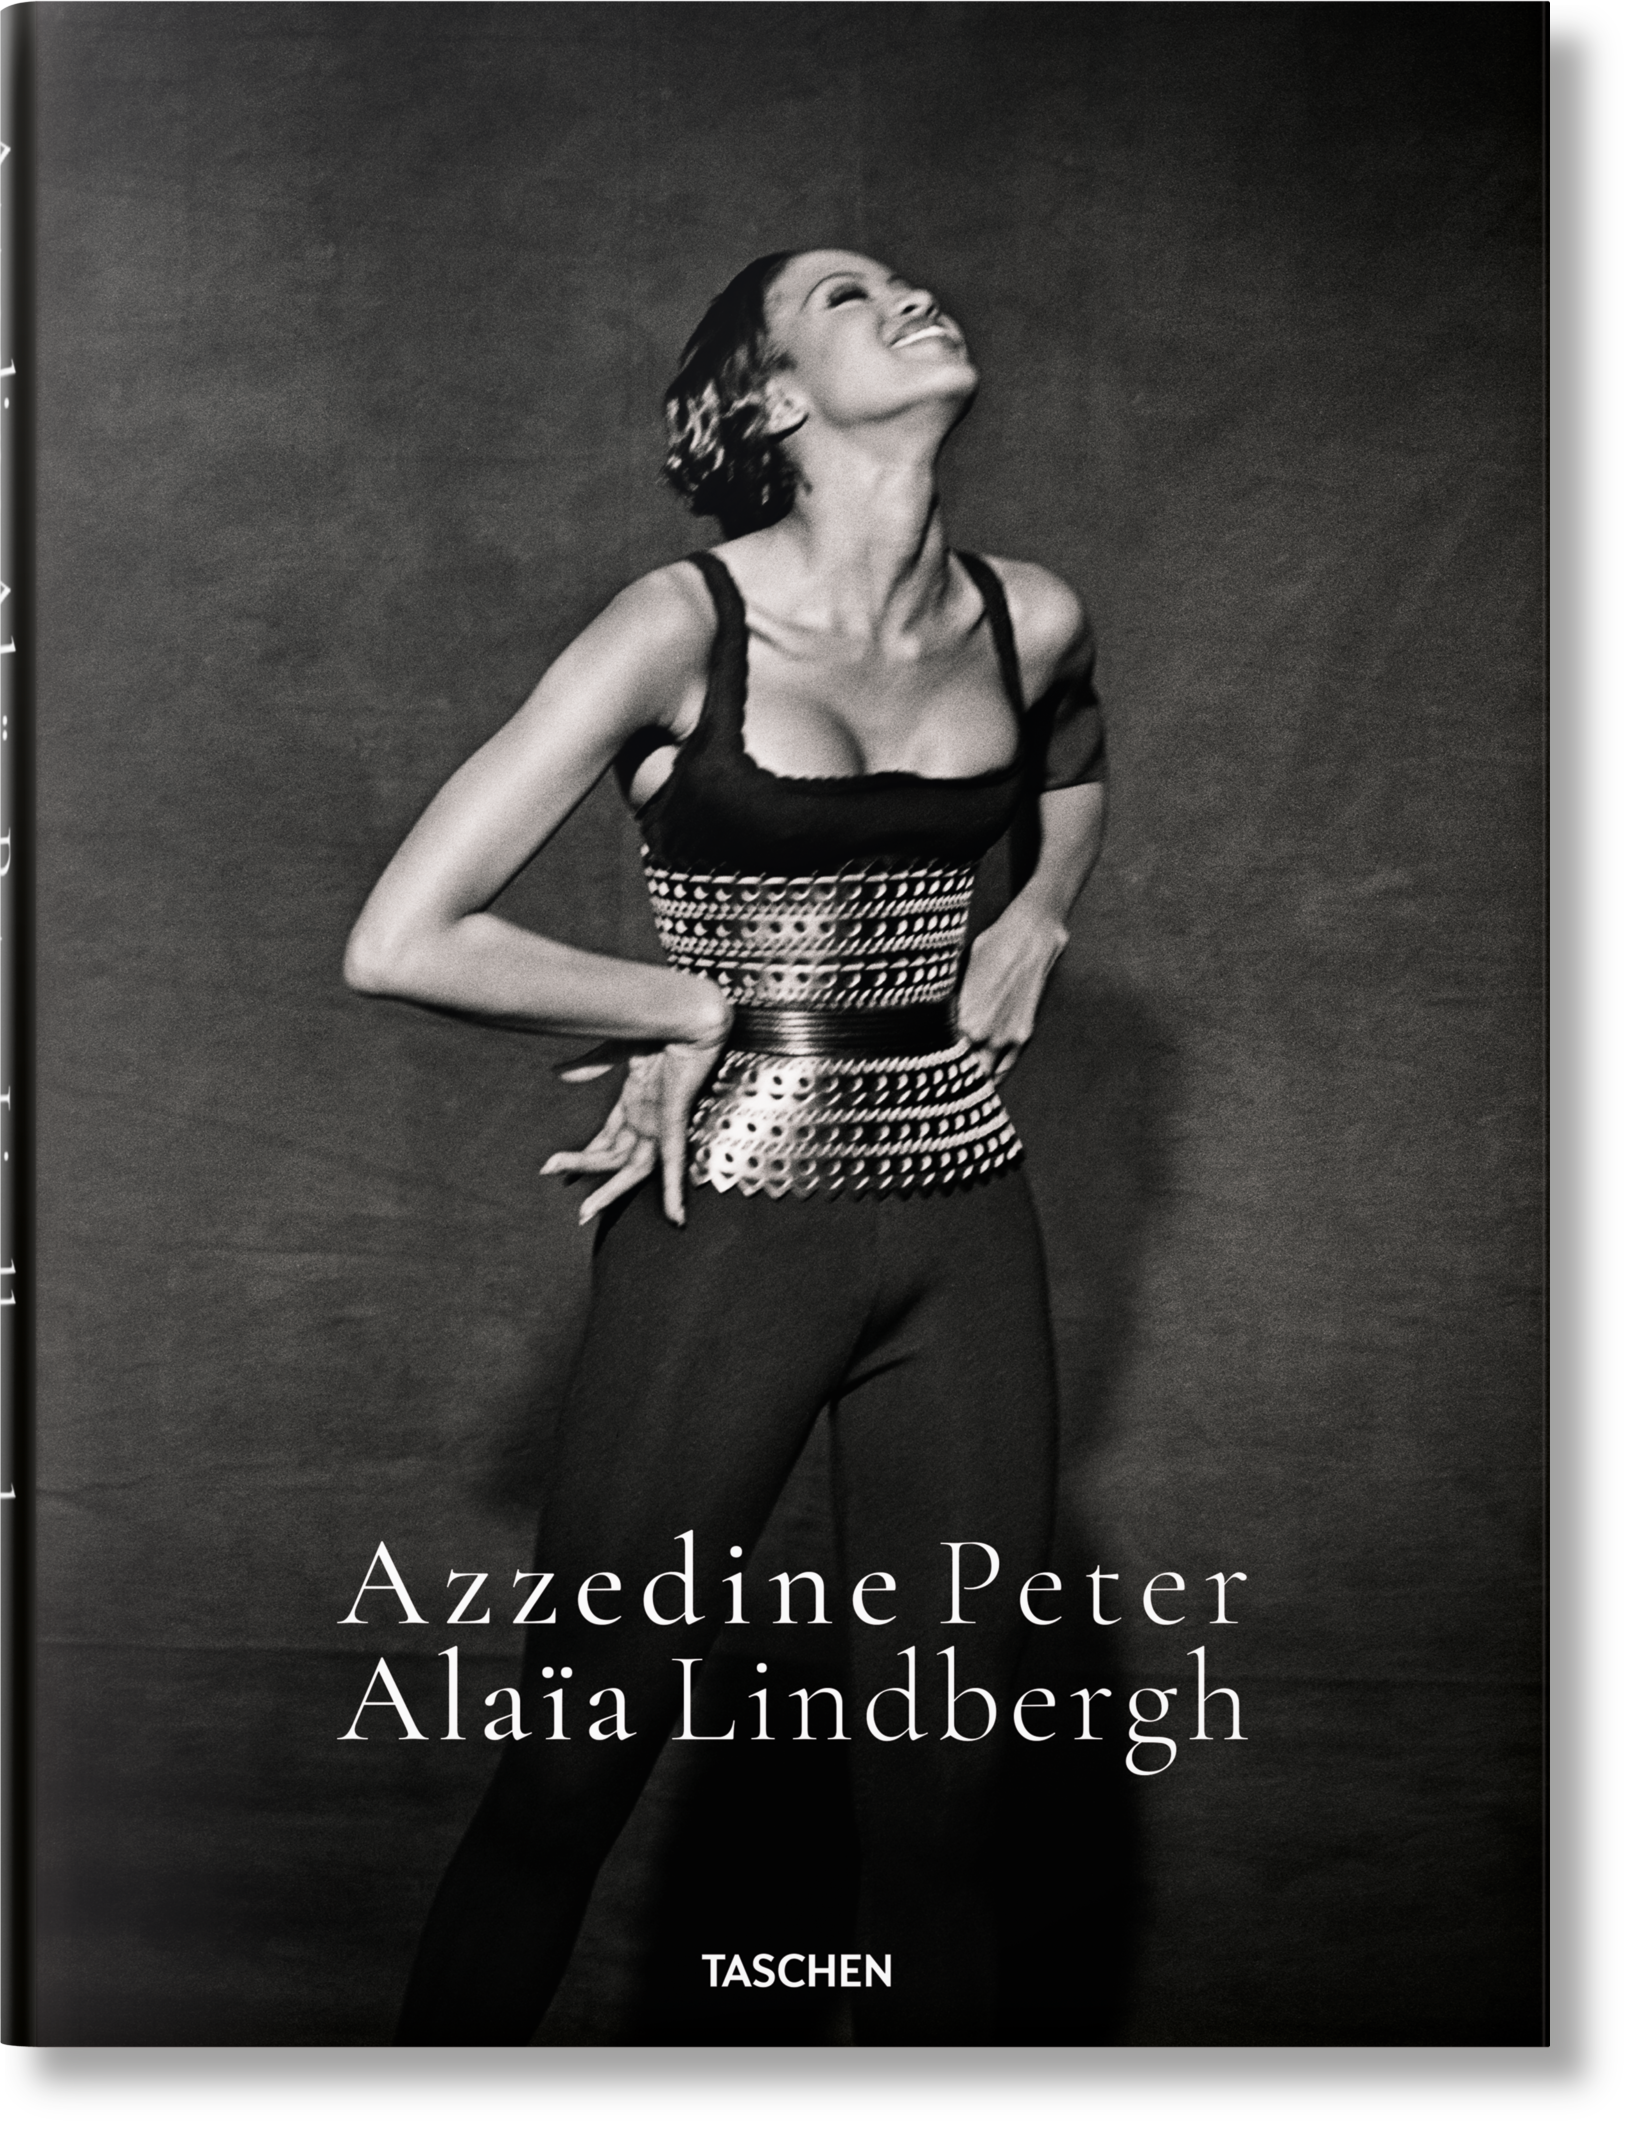 Peter Lindbergh - Azzedine Alaïa